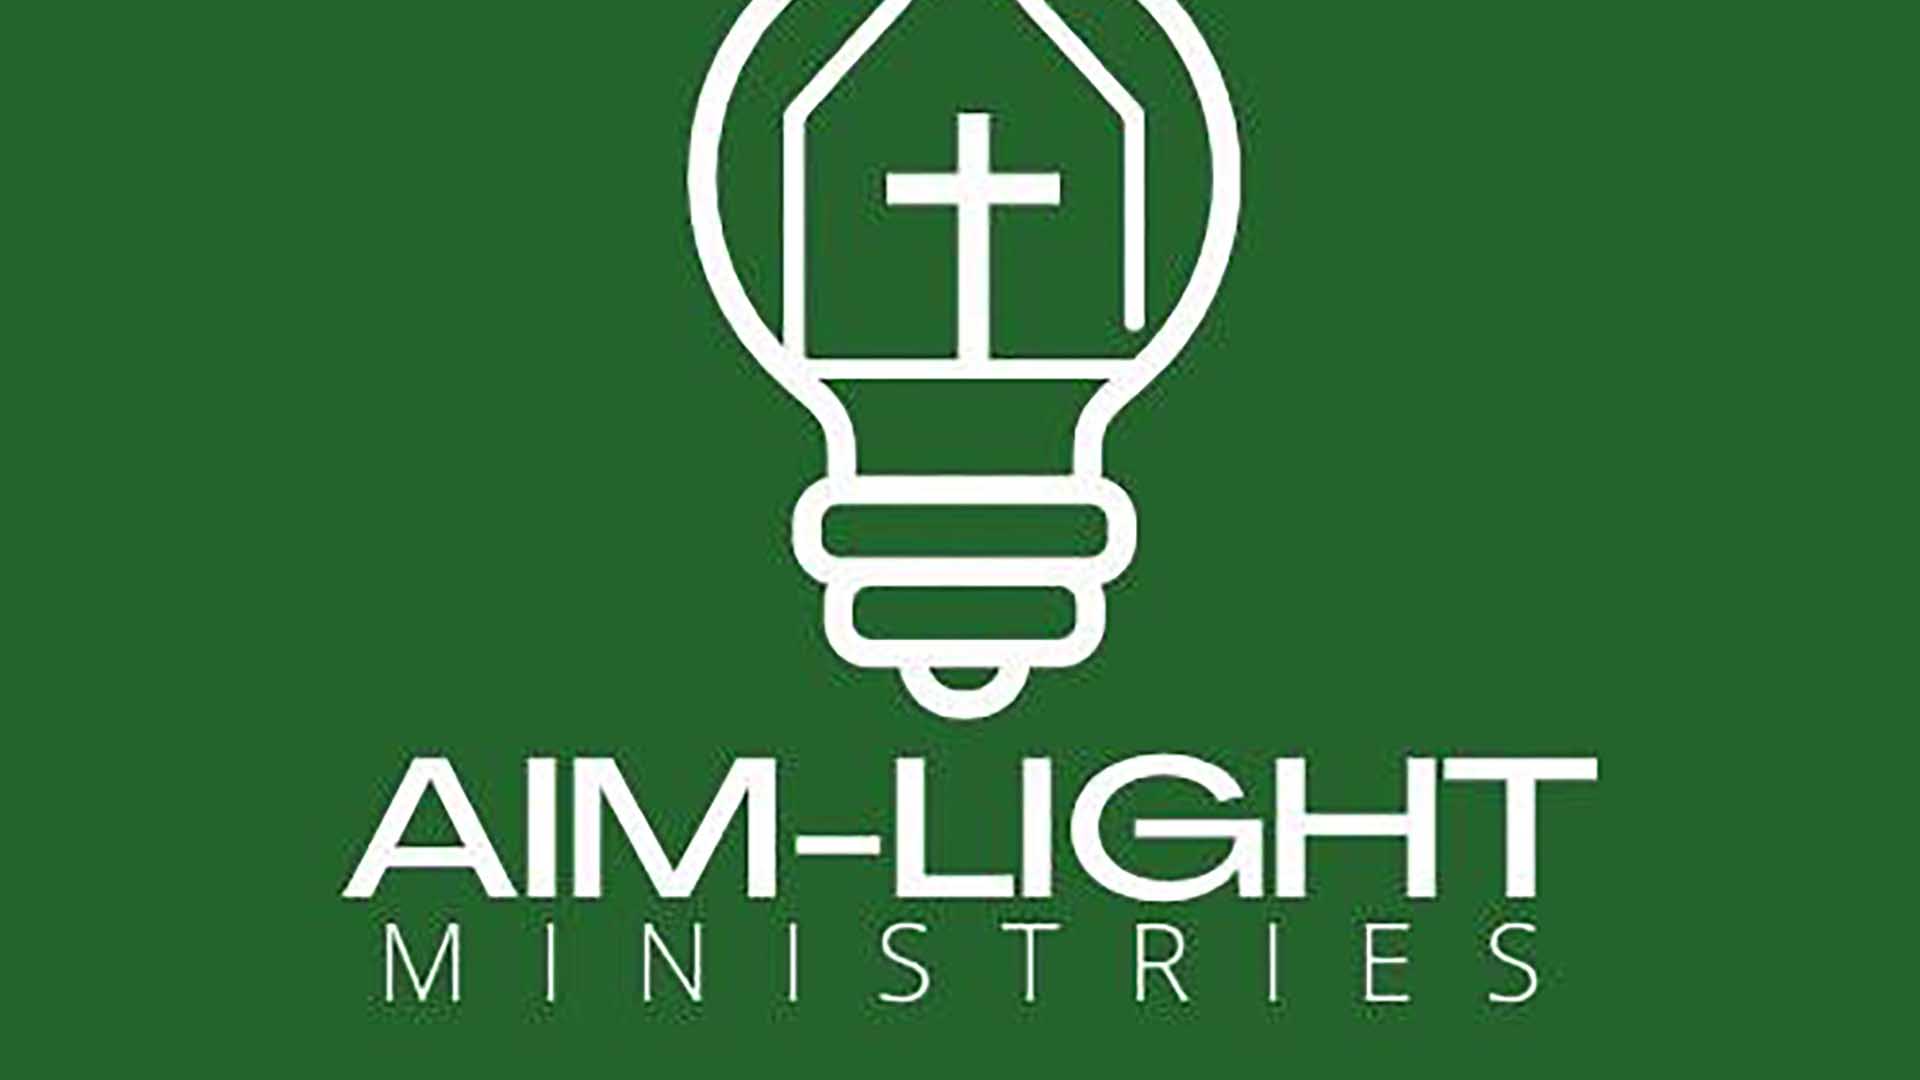 Aim-Light Ministries logo